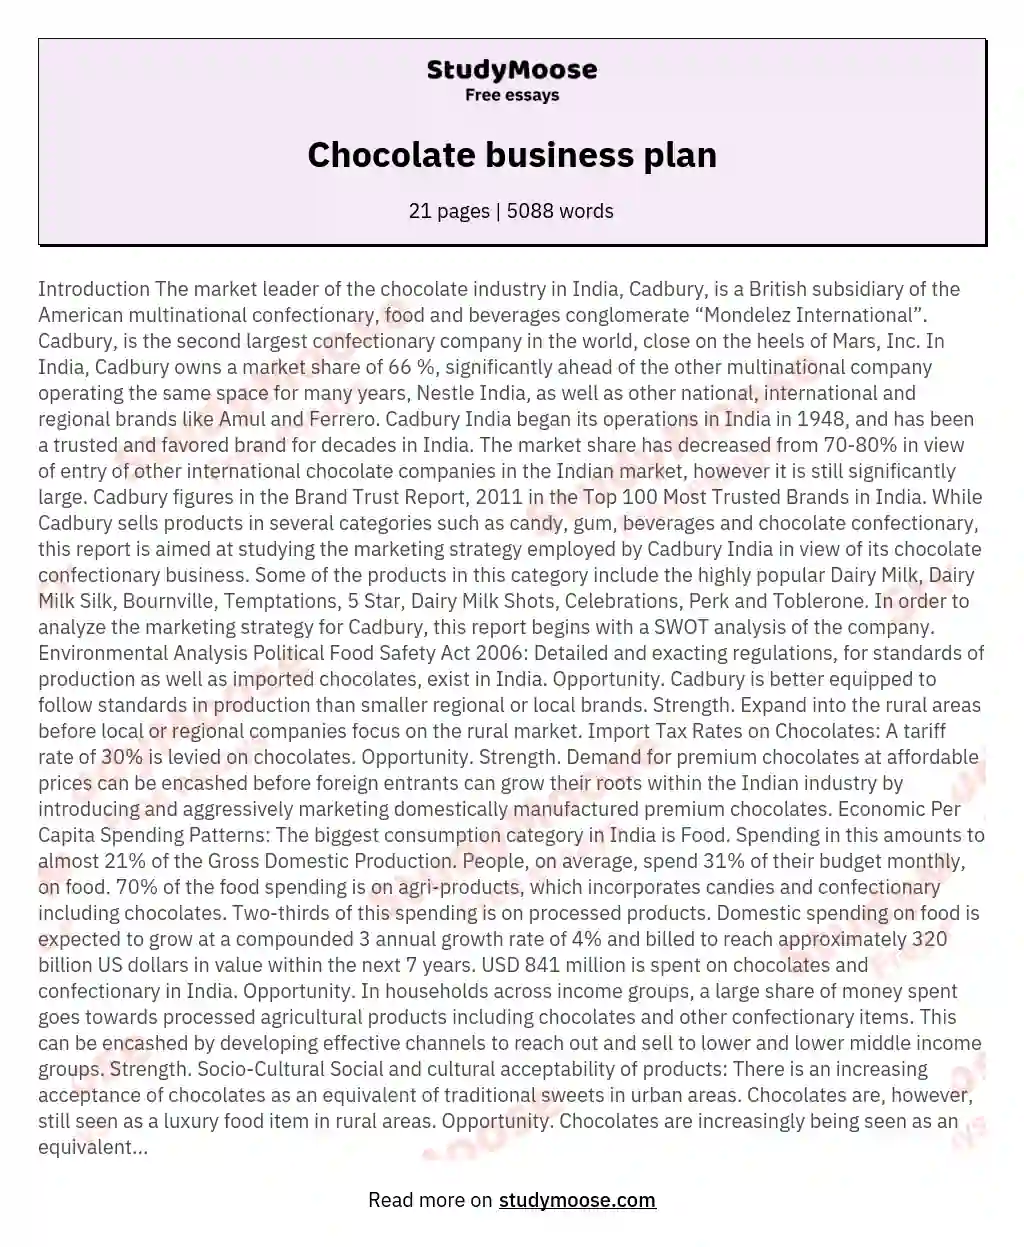 Chocolate business plan essay